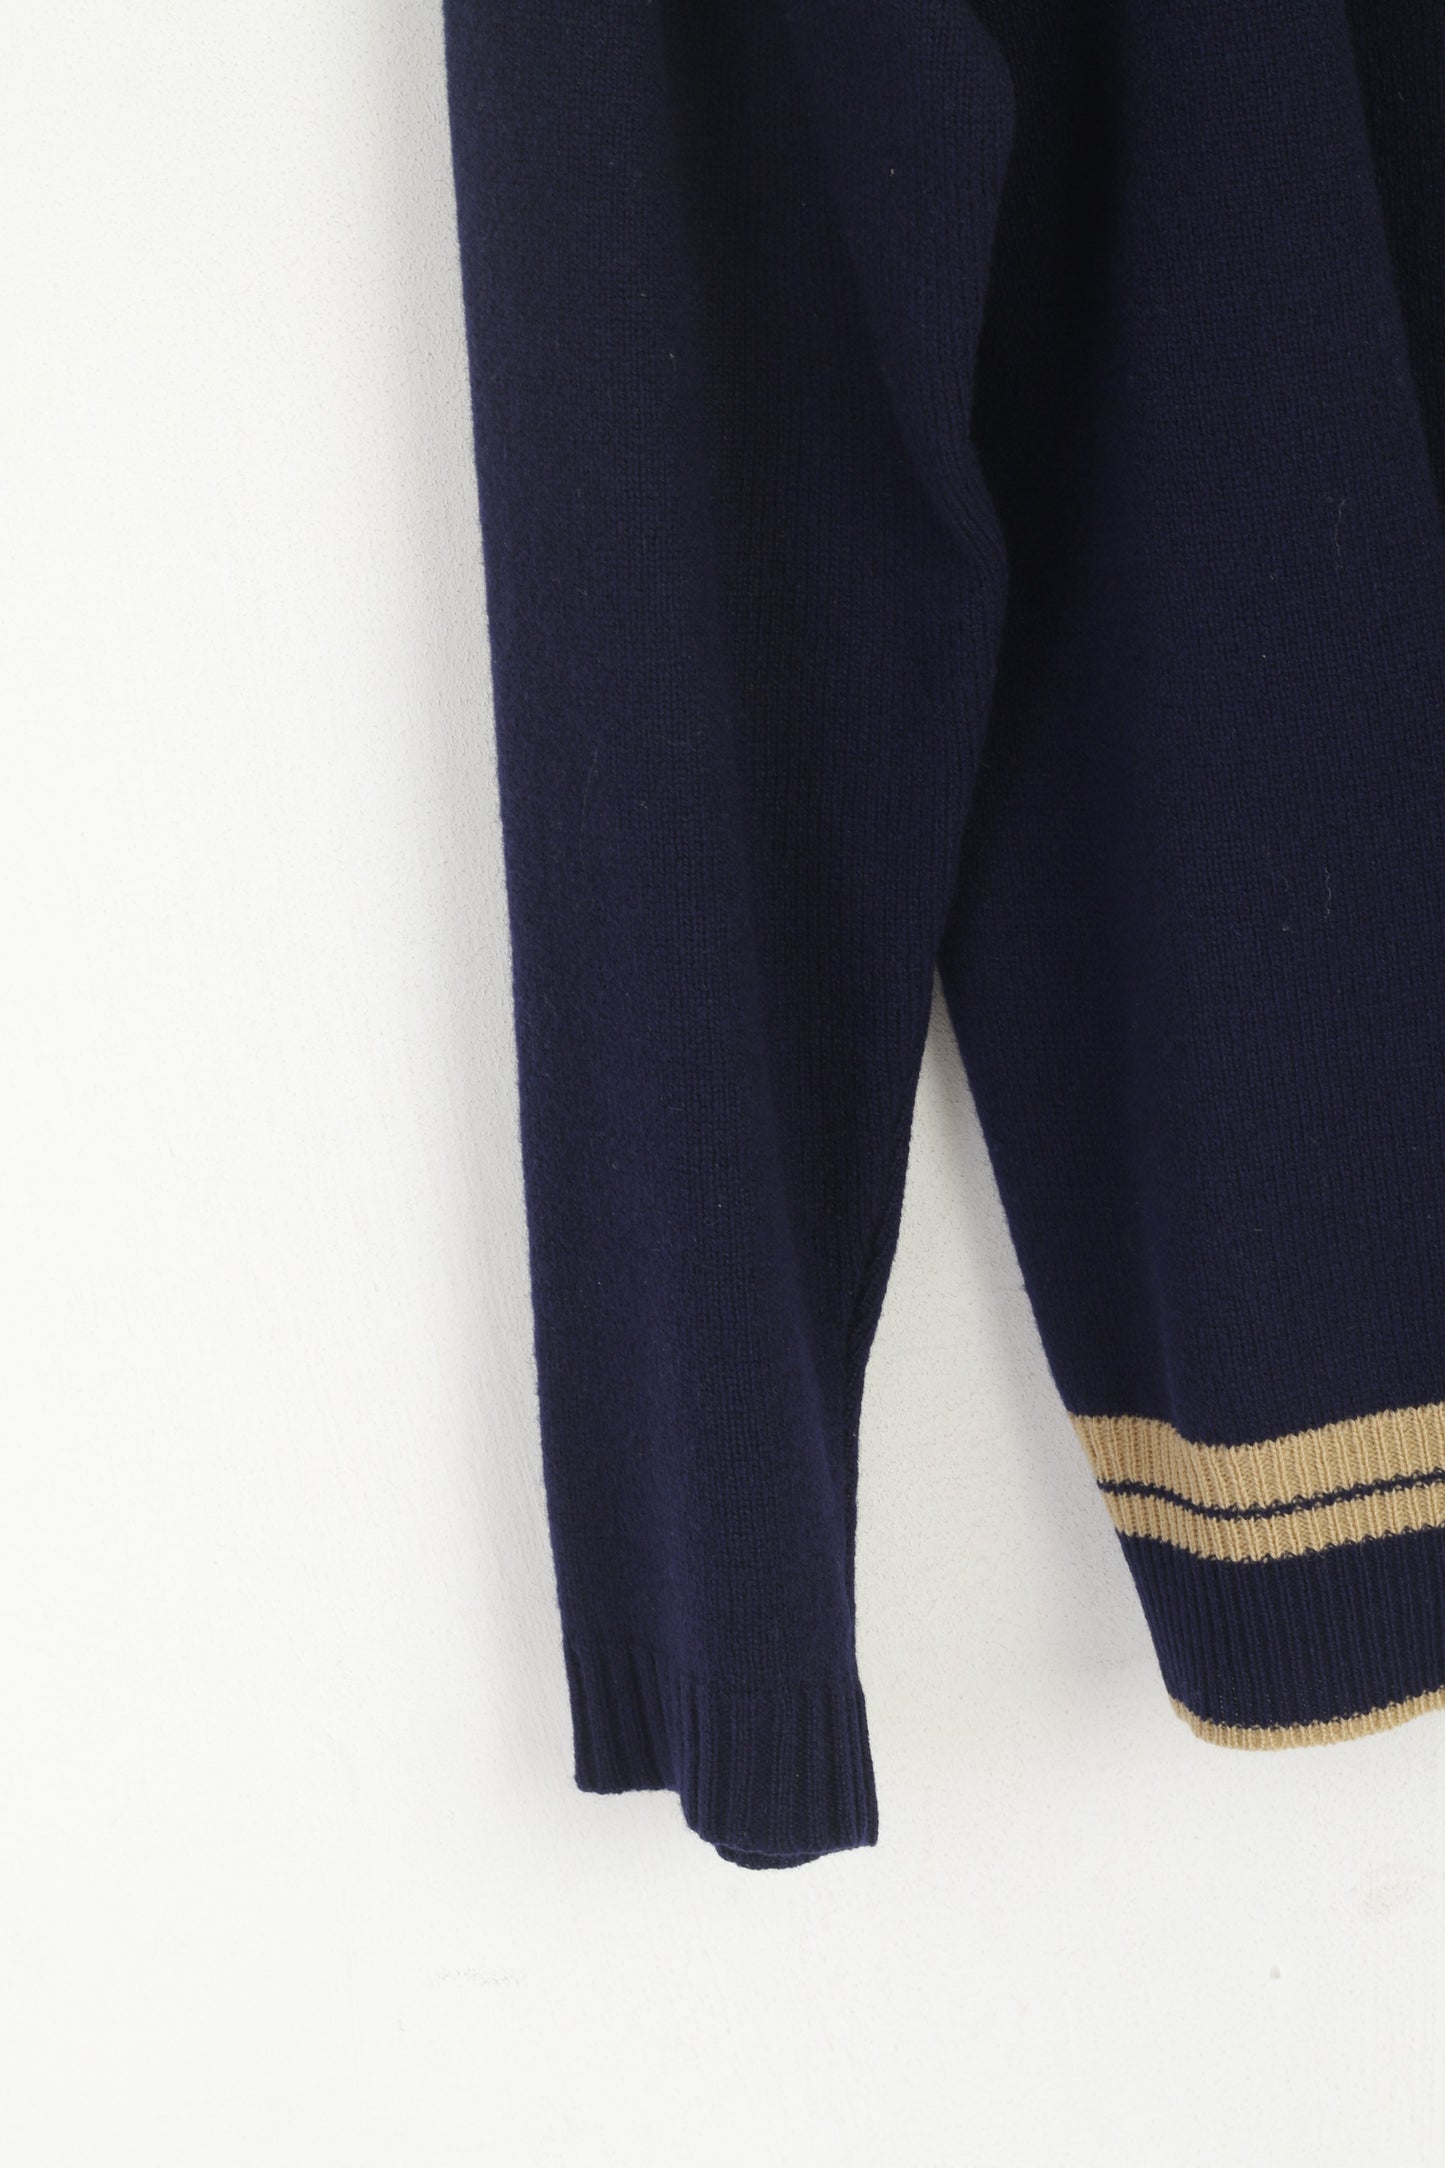 Henri Lloyd Men M Jumper Navy Wool Vintage Full Zip Cardigan Sweater